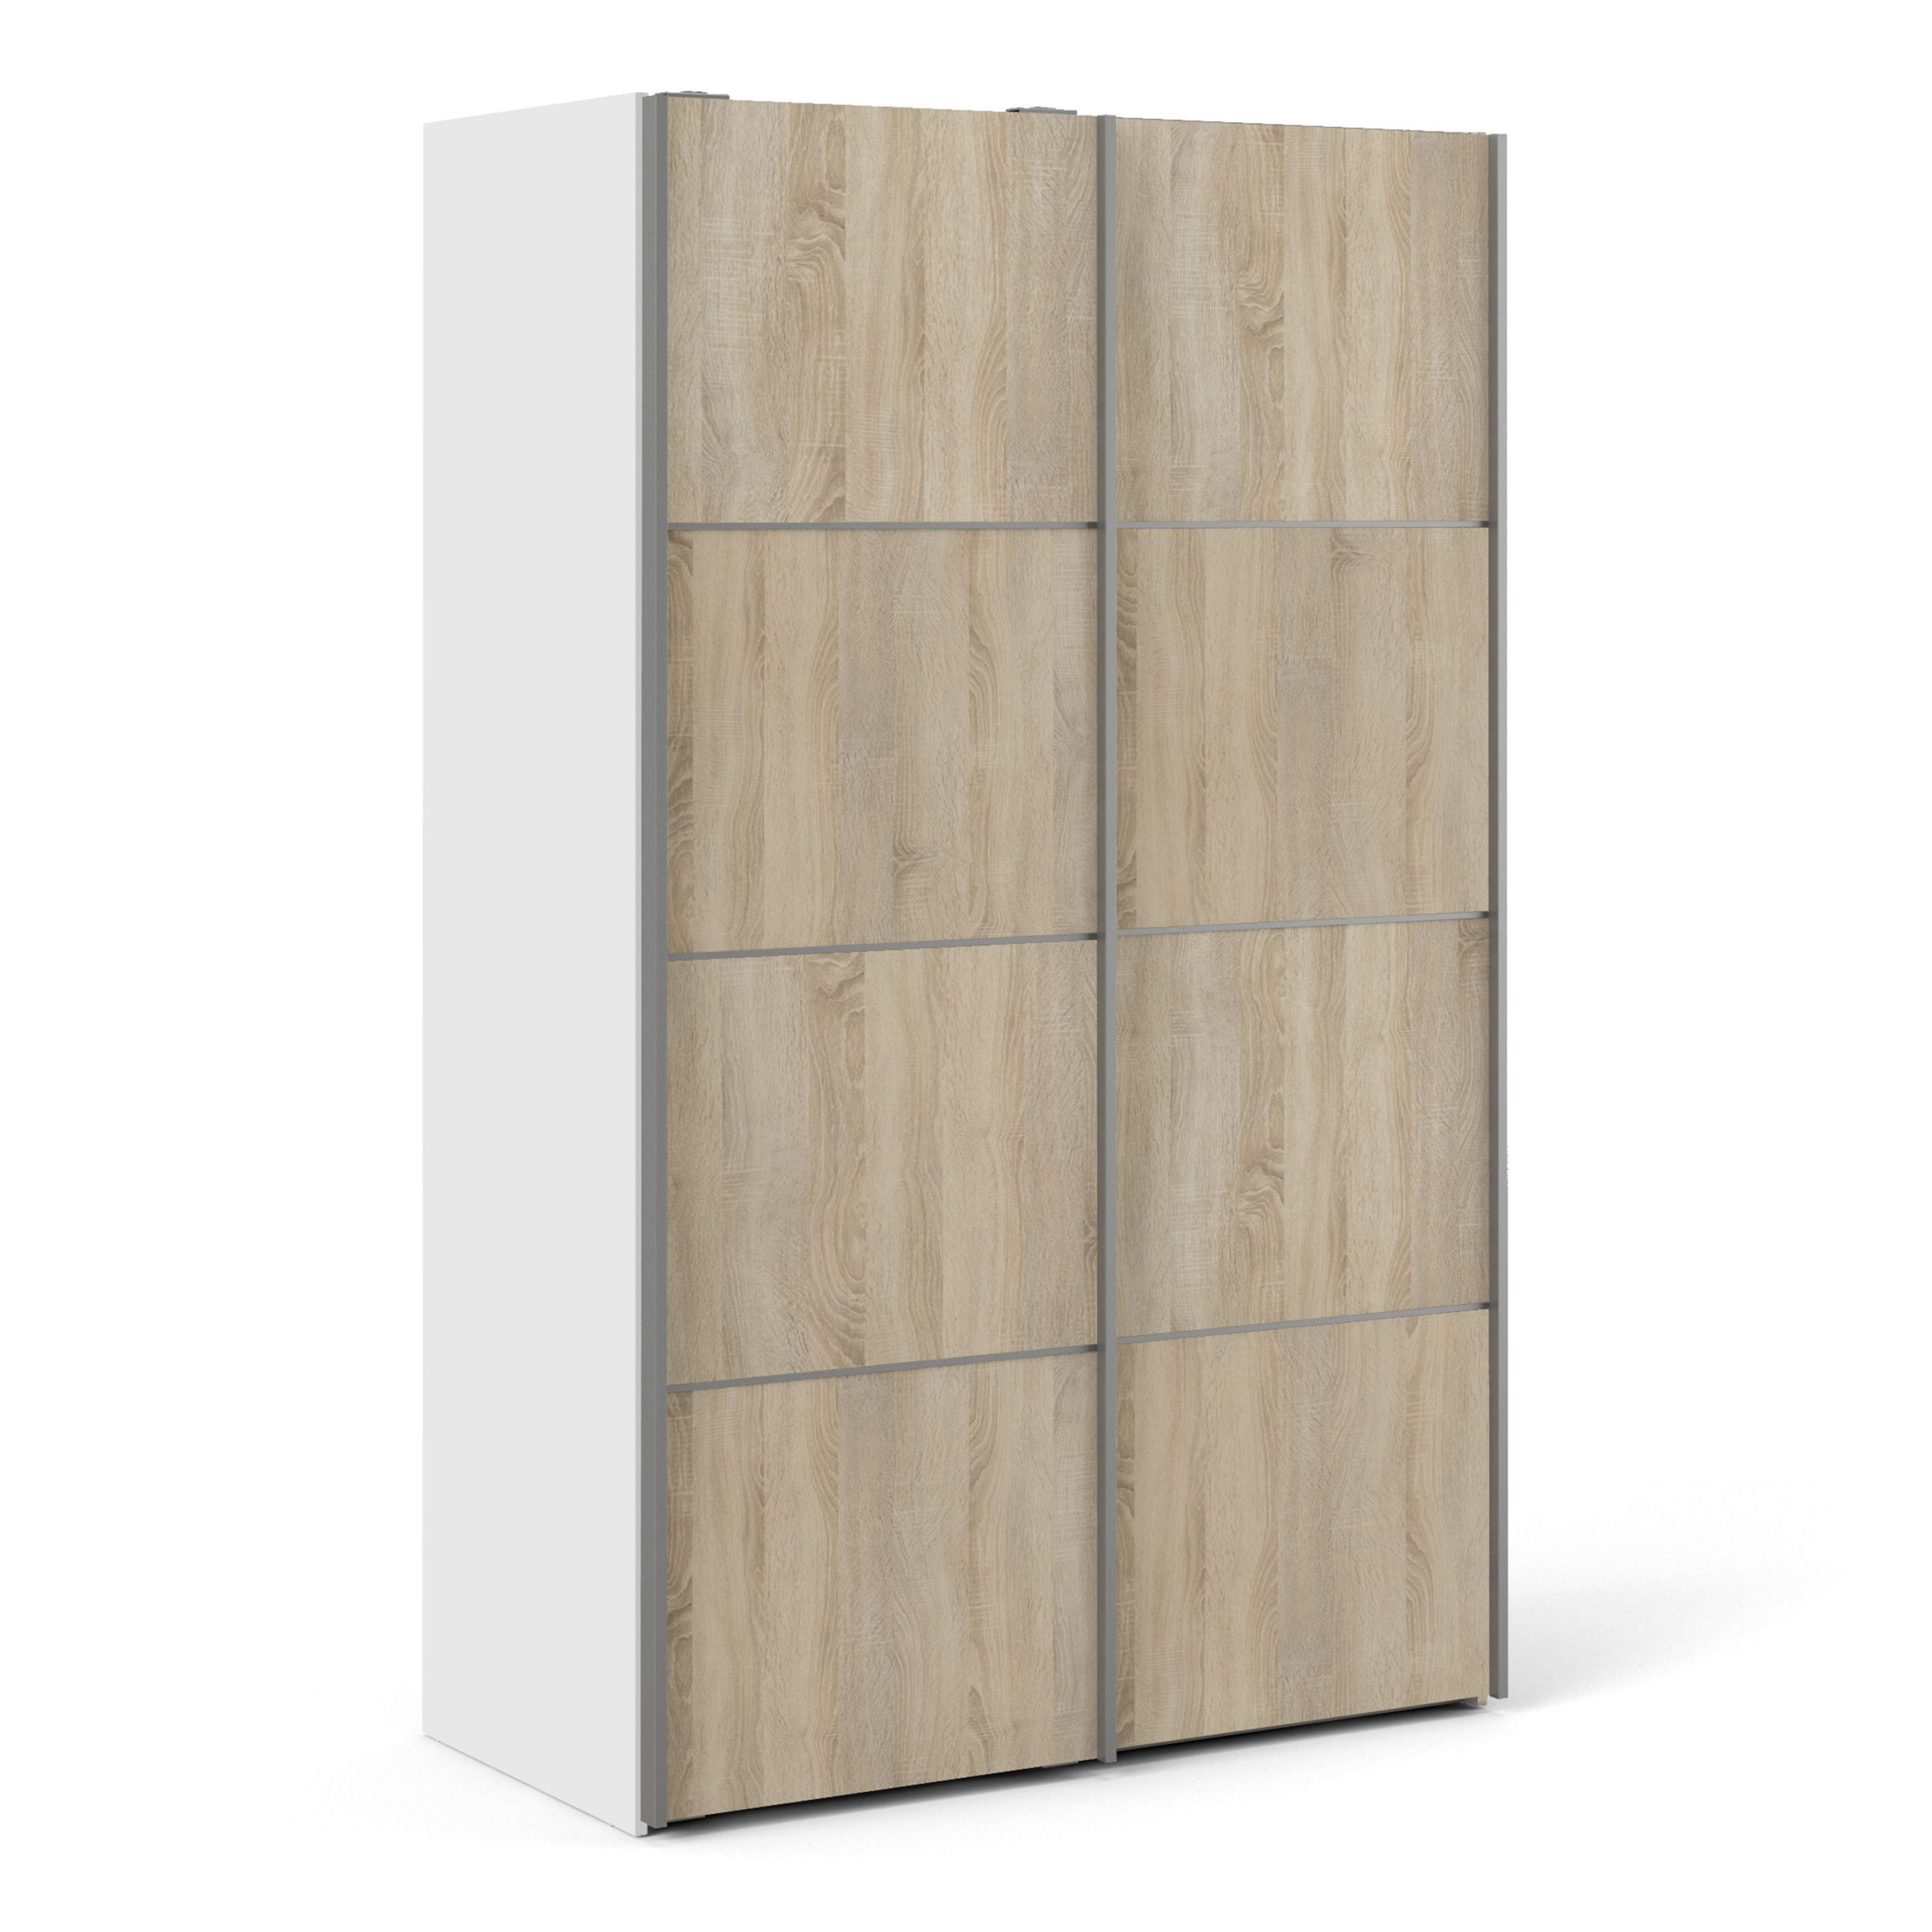 Verona Sliding Wardrobe 120cm In White With Oak Doors With 5 Shelves